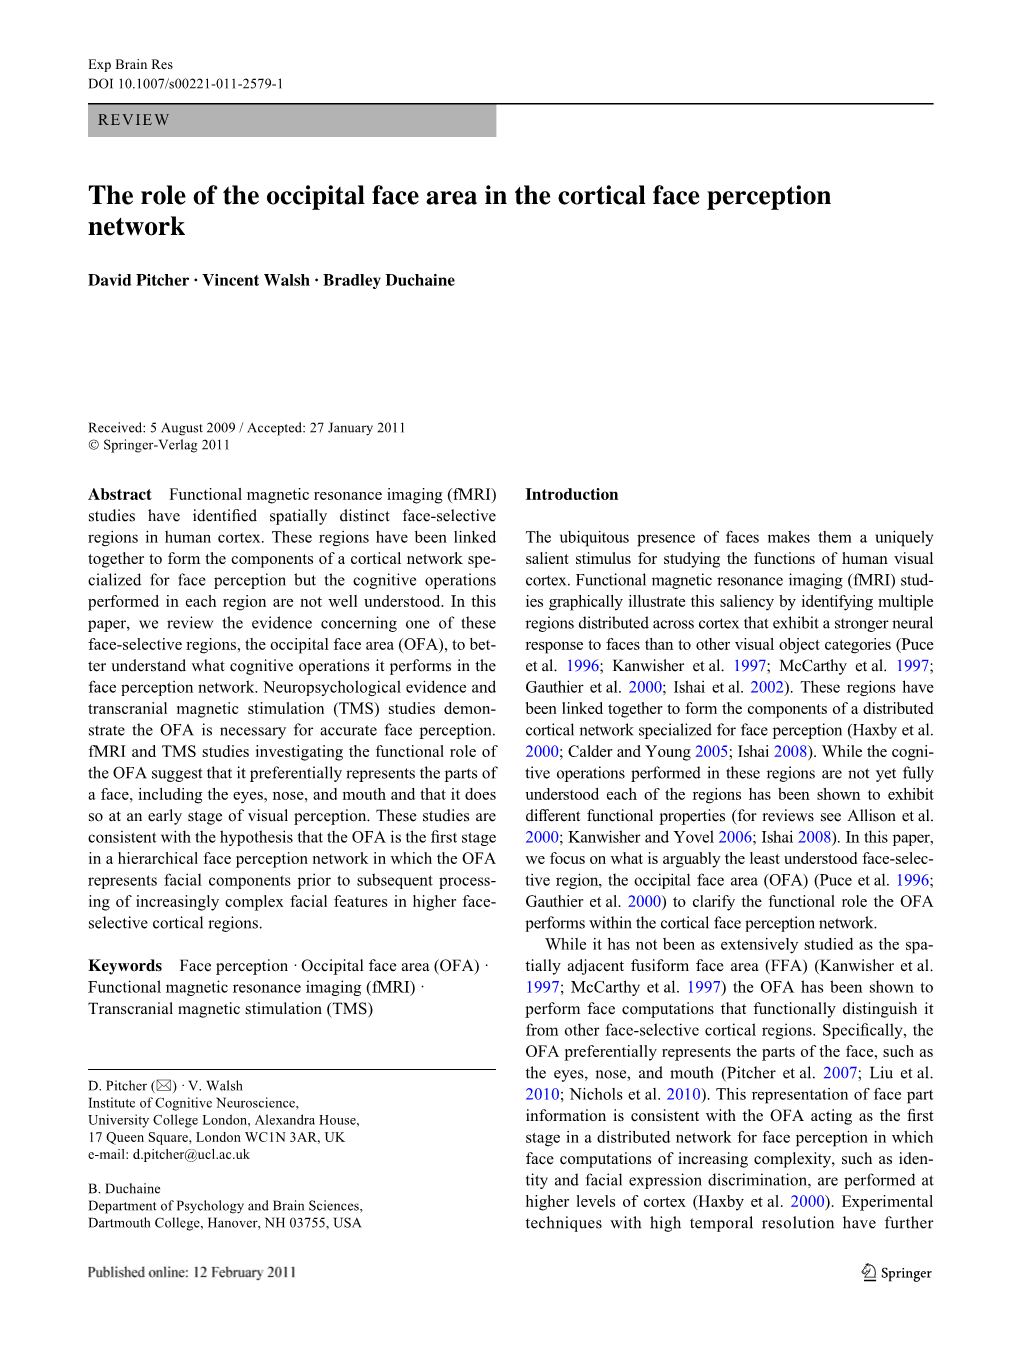 Occipital Face Area in the Cortical Face Perception Network